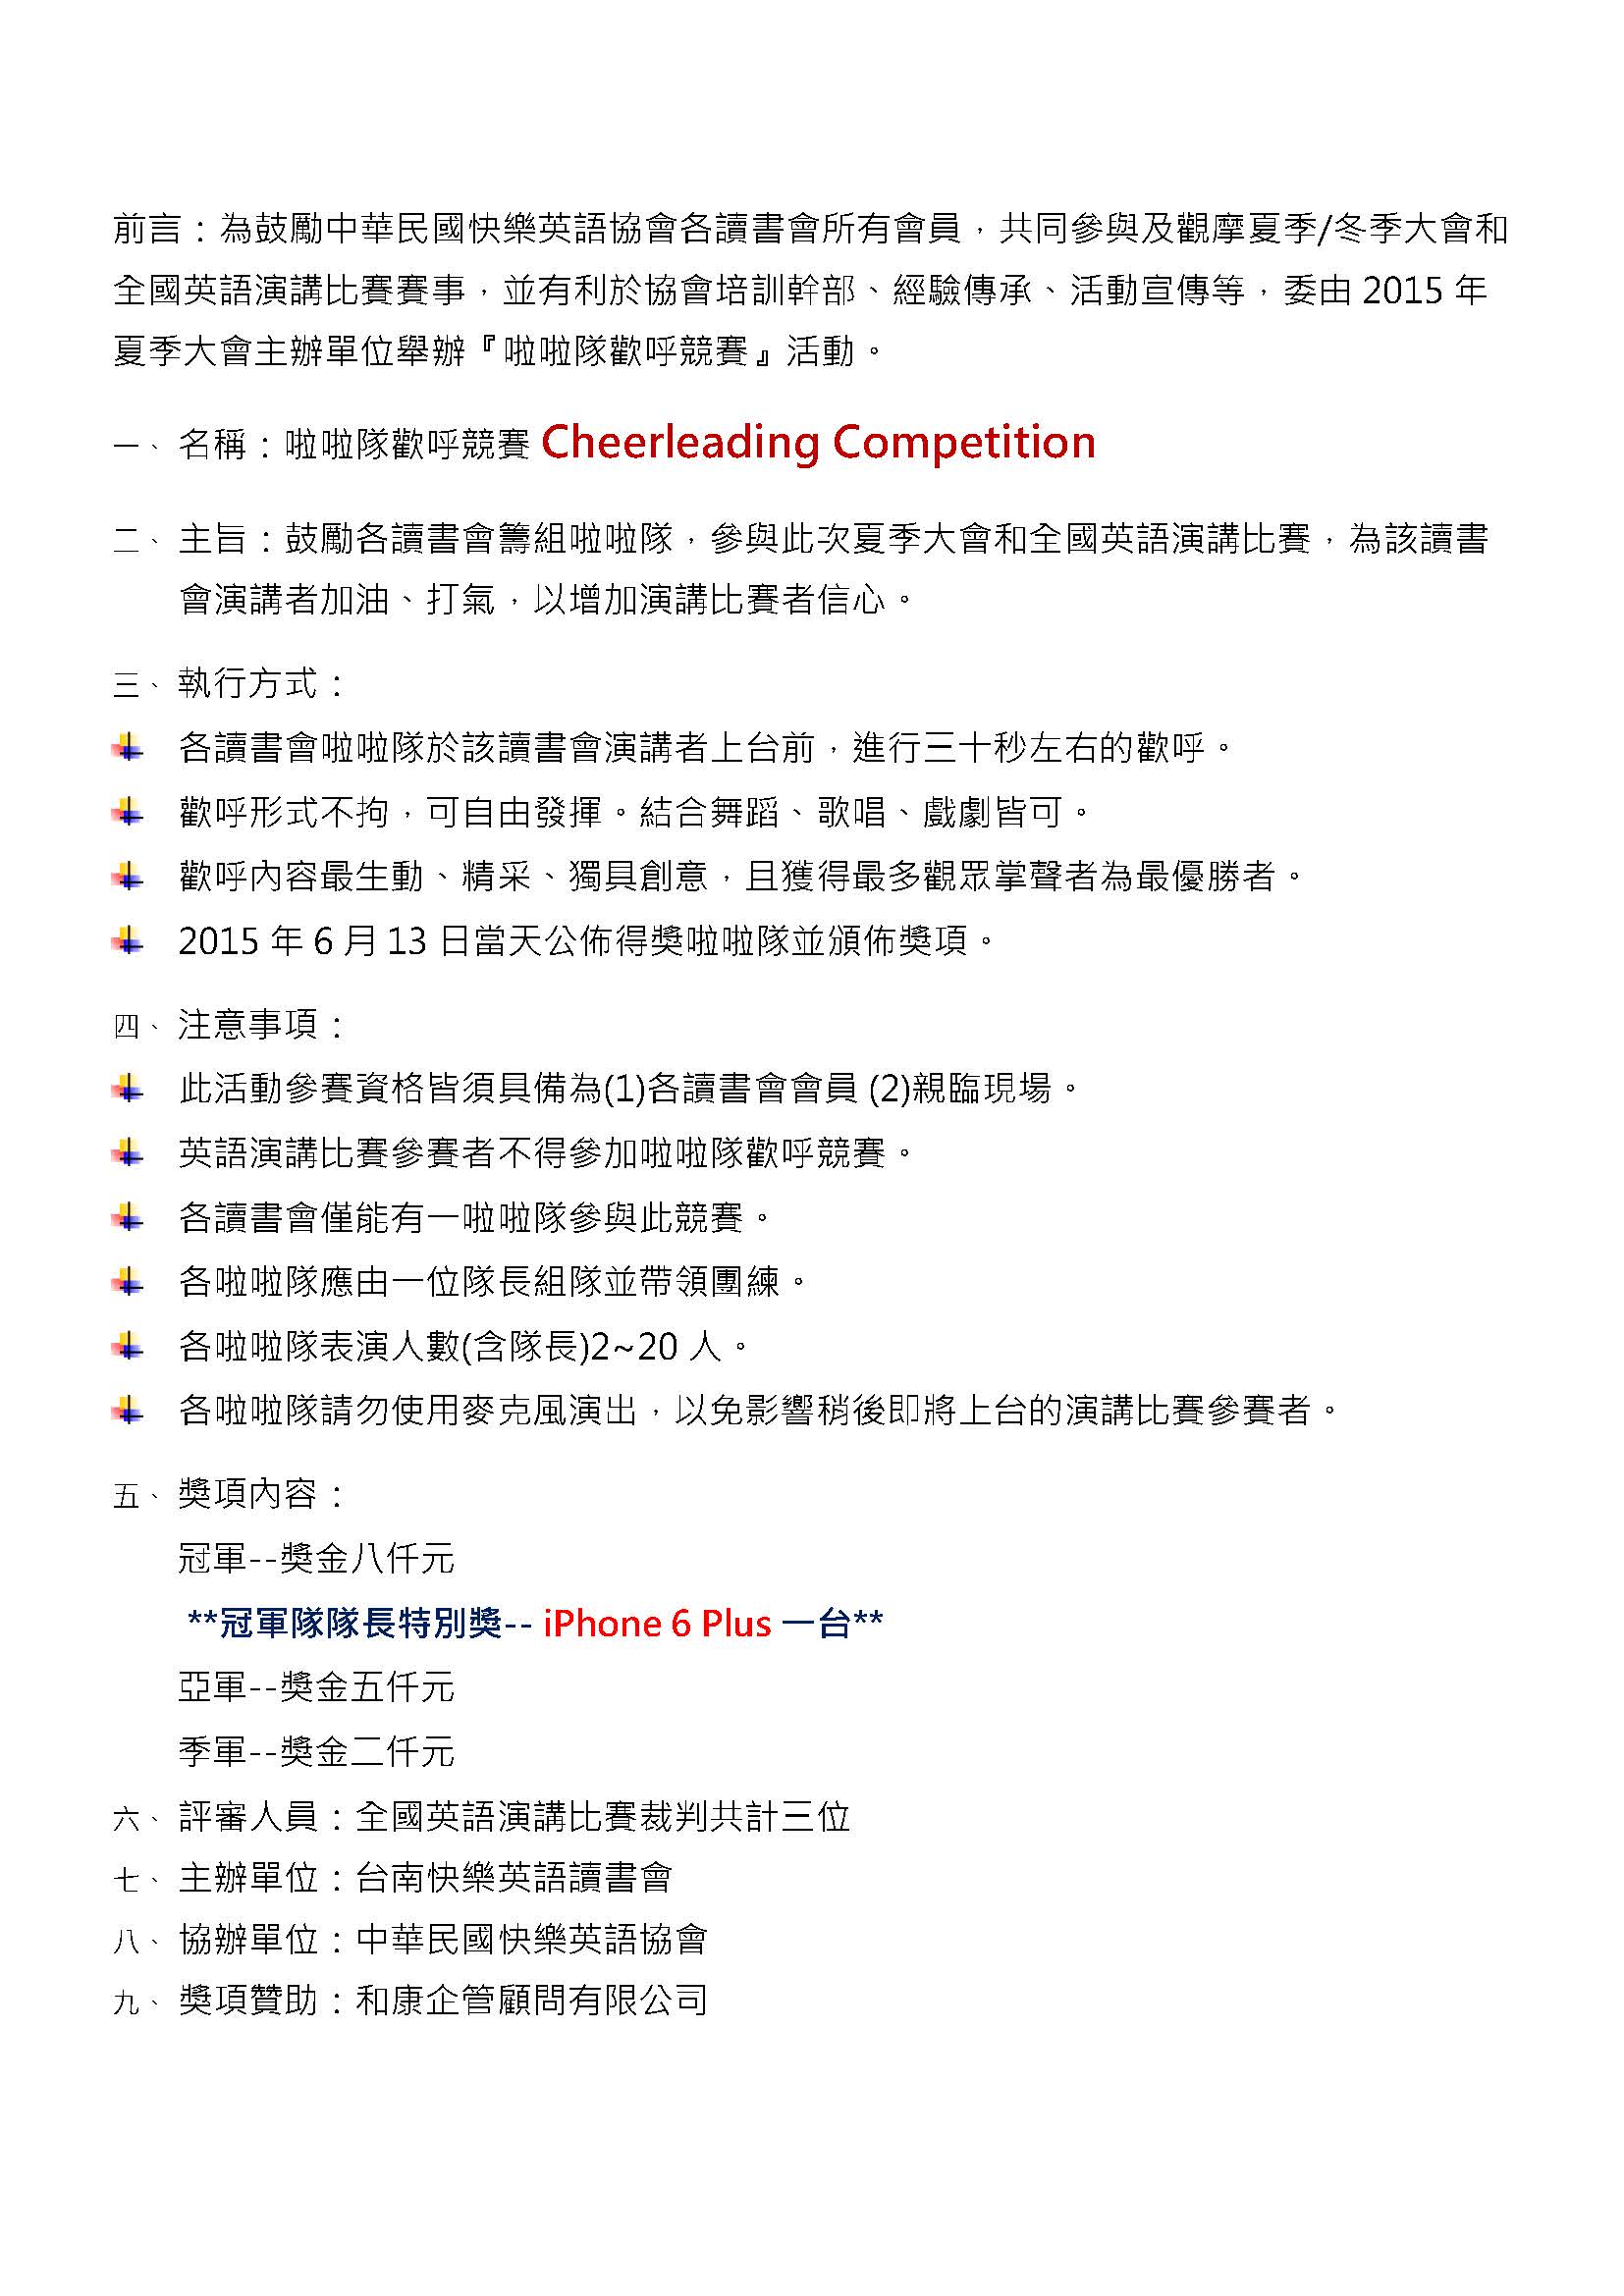 2015 Summer Cheerleading Competition.jpg